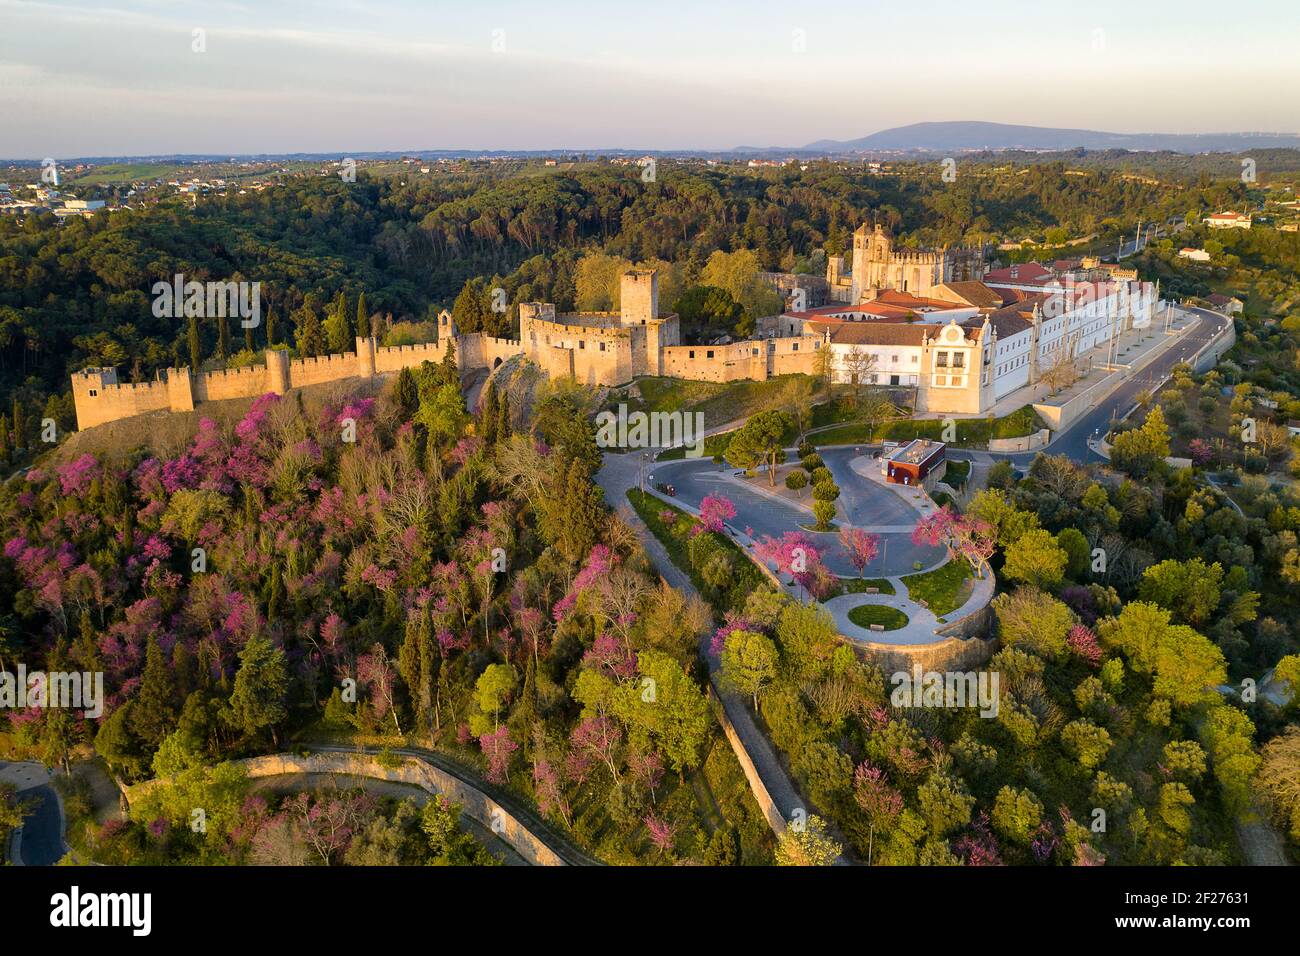 Aerial drone view of Convento de cristo christ convent in Tomar at sunrise, Portugal Stock Photo